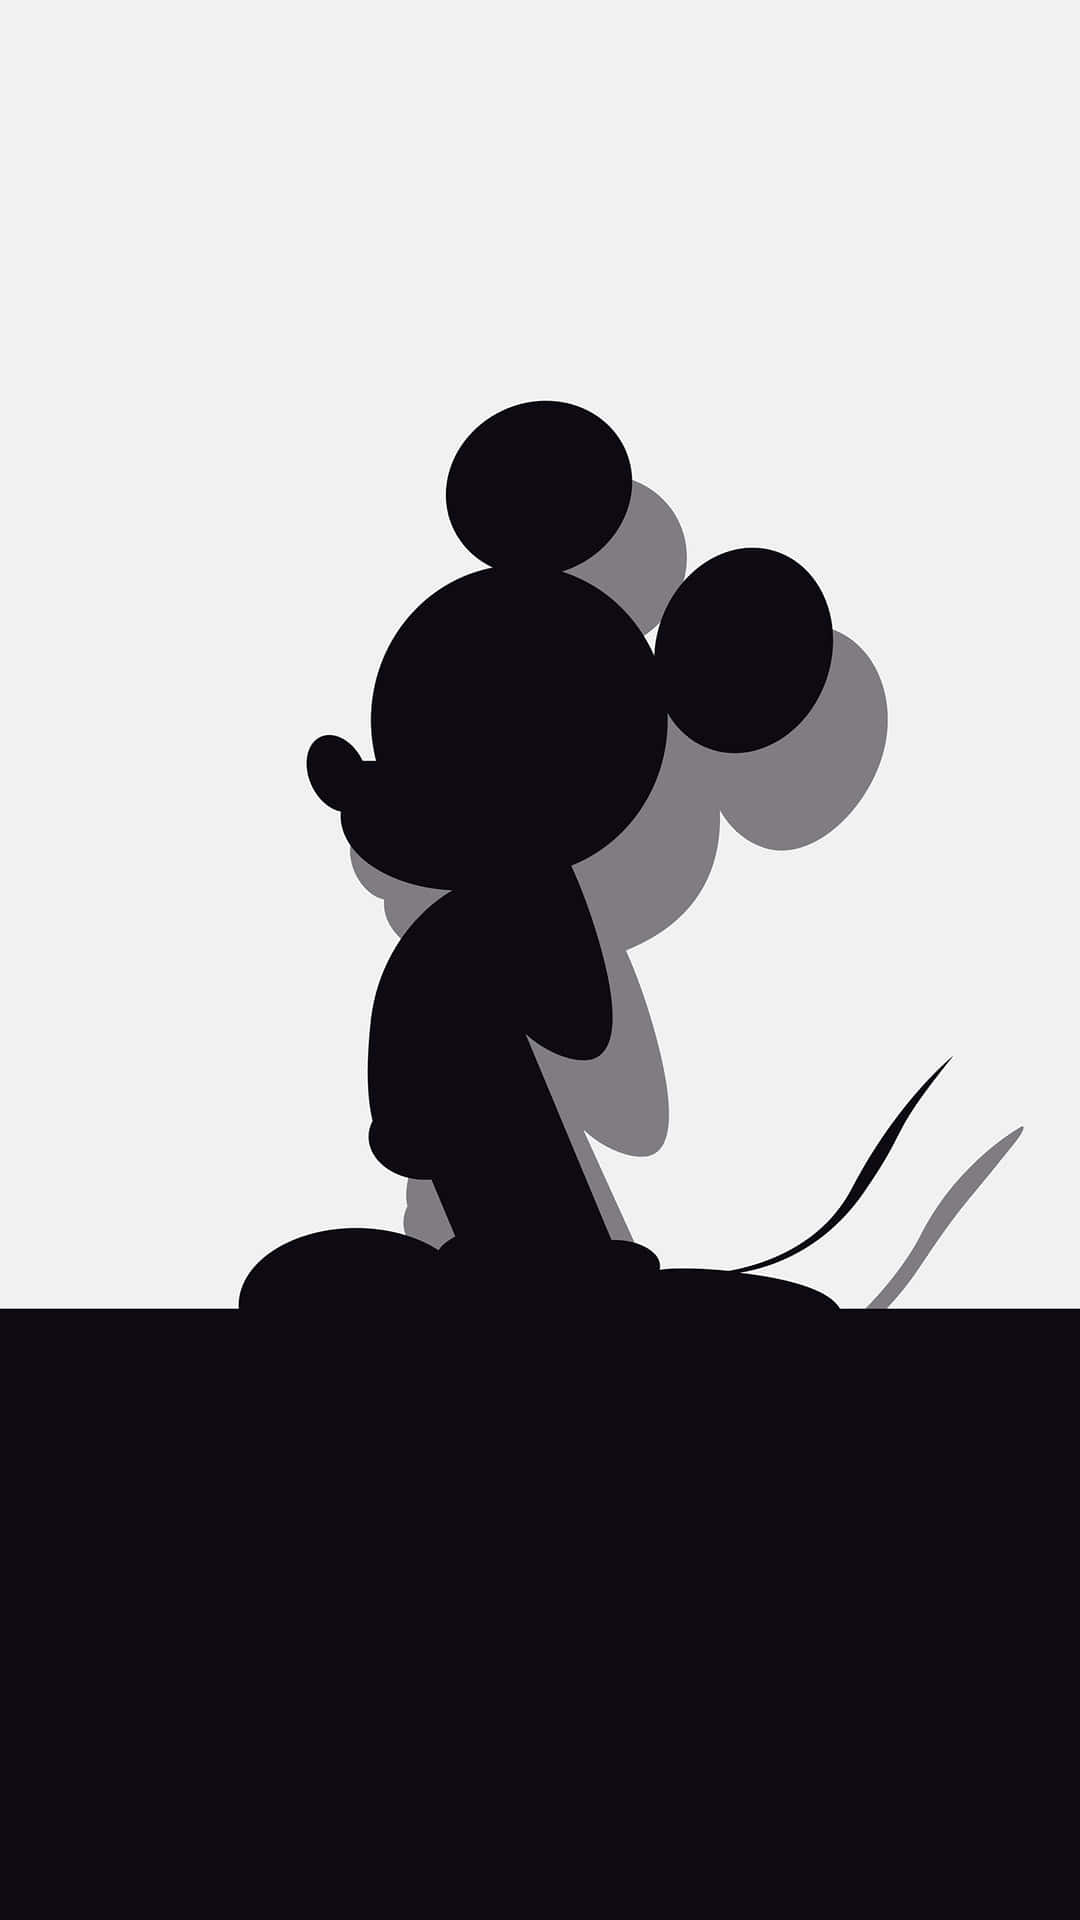 Sötasilhouette Av Mickey Mouse-öron Wallpaper